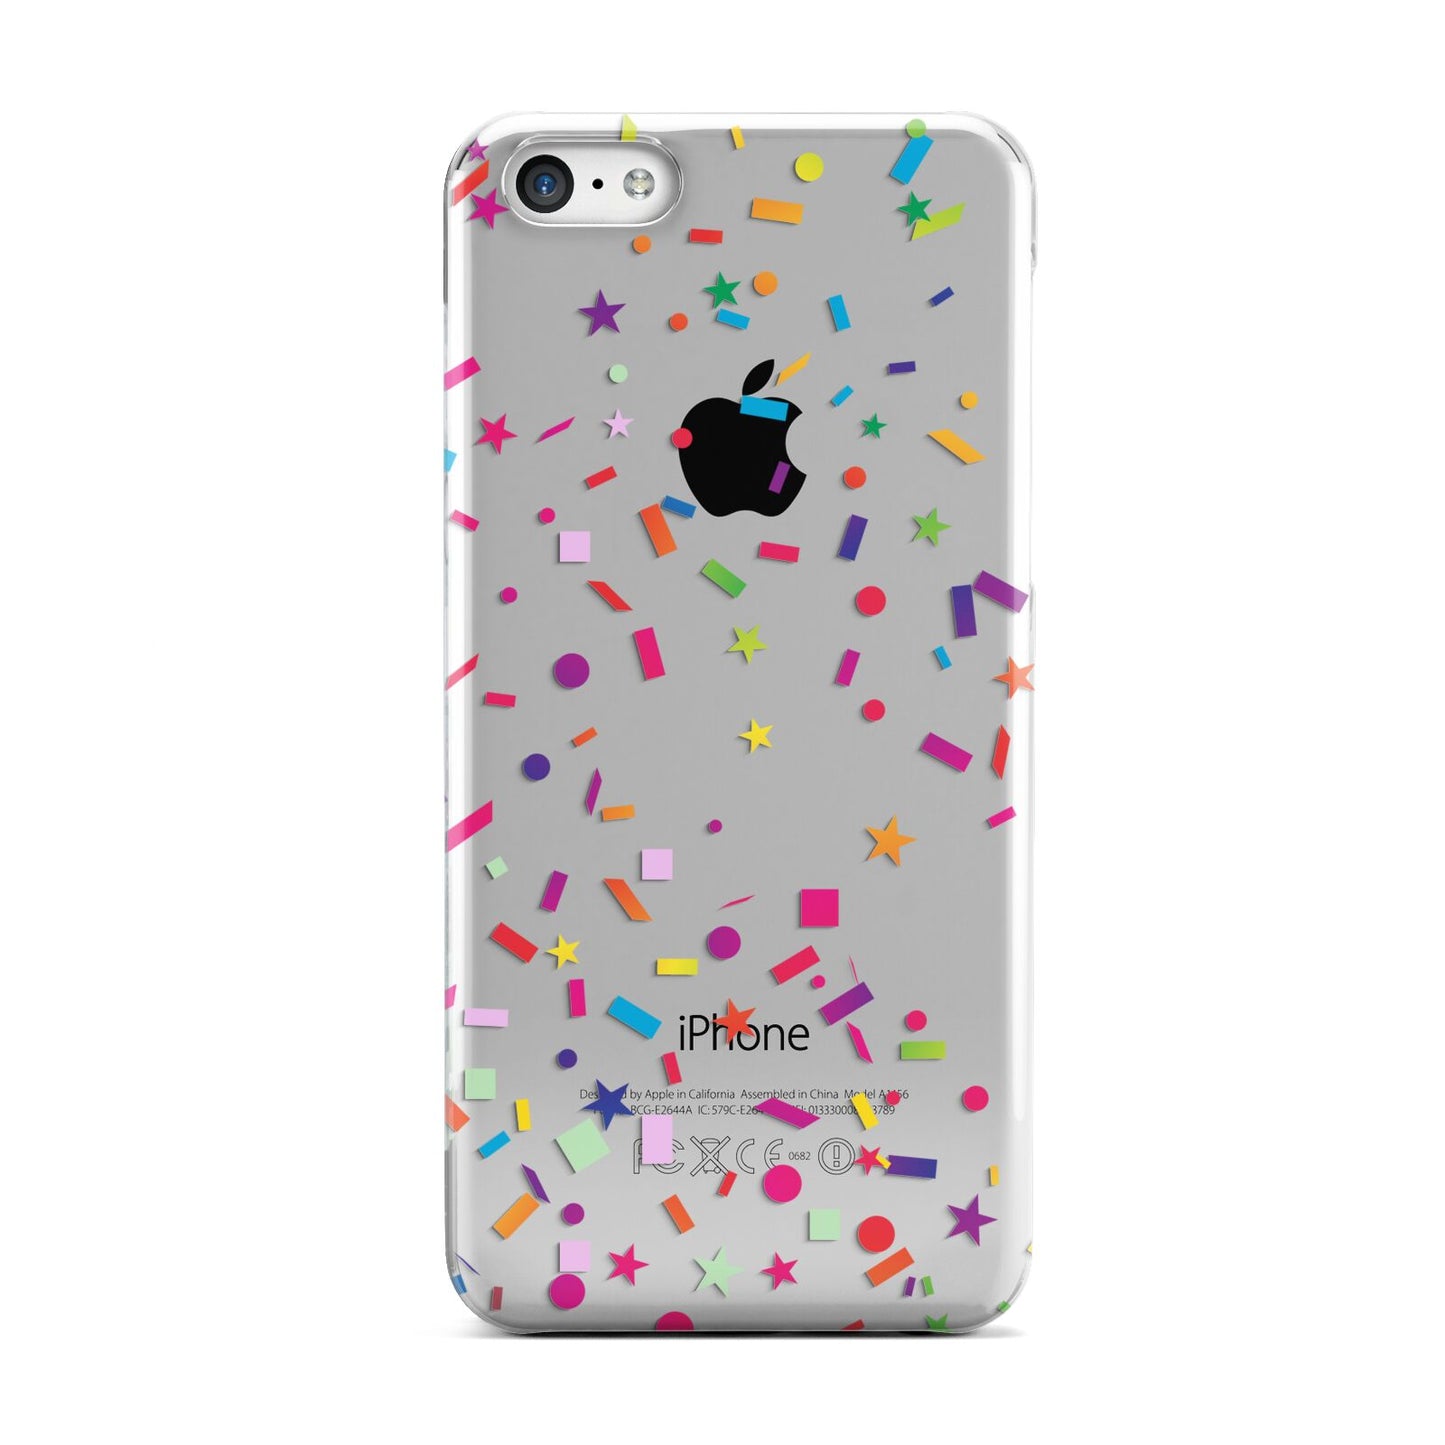 Confetti Apple iPhone 5c Case